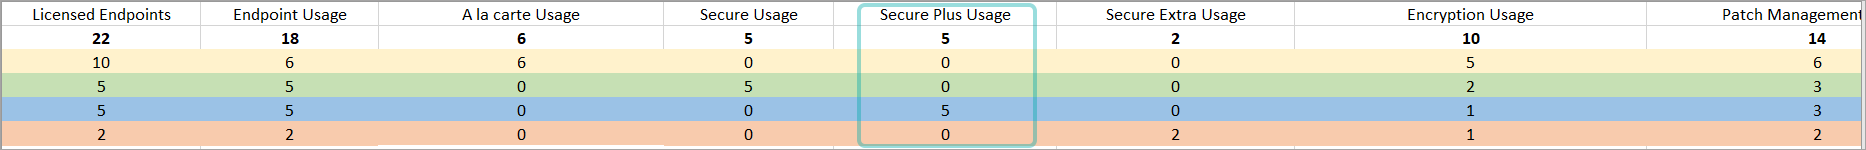 monthly__secureextra_usage_340181_en.png